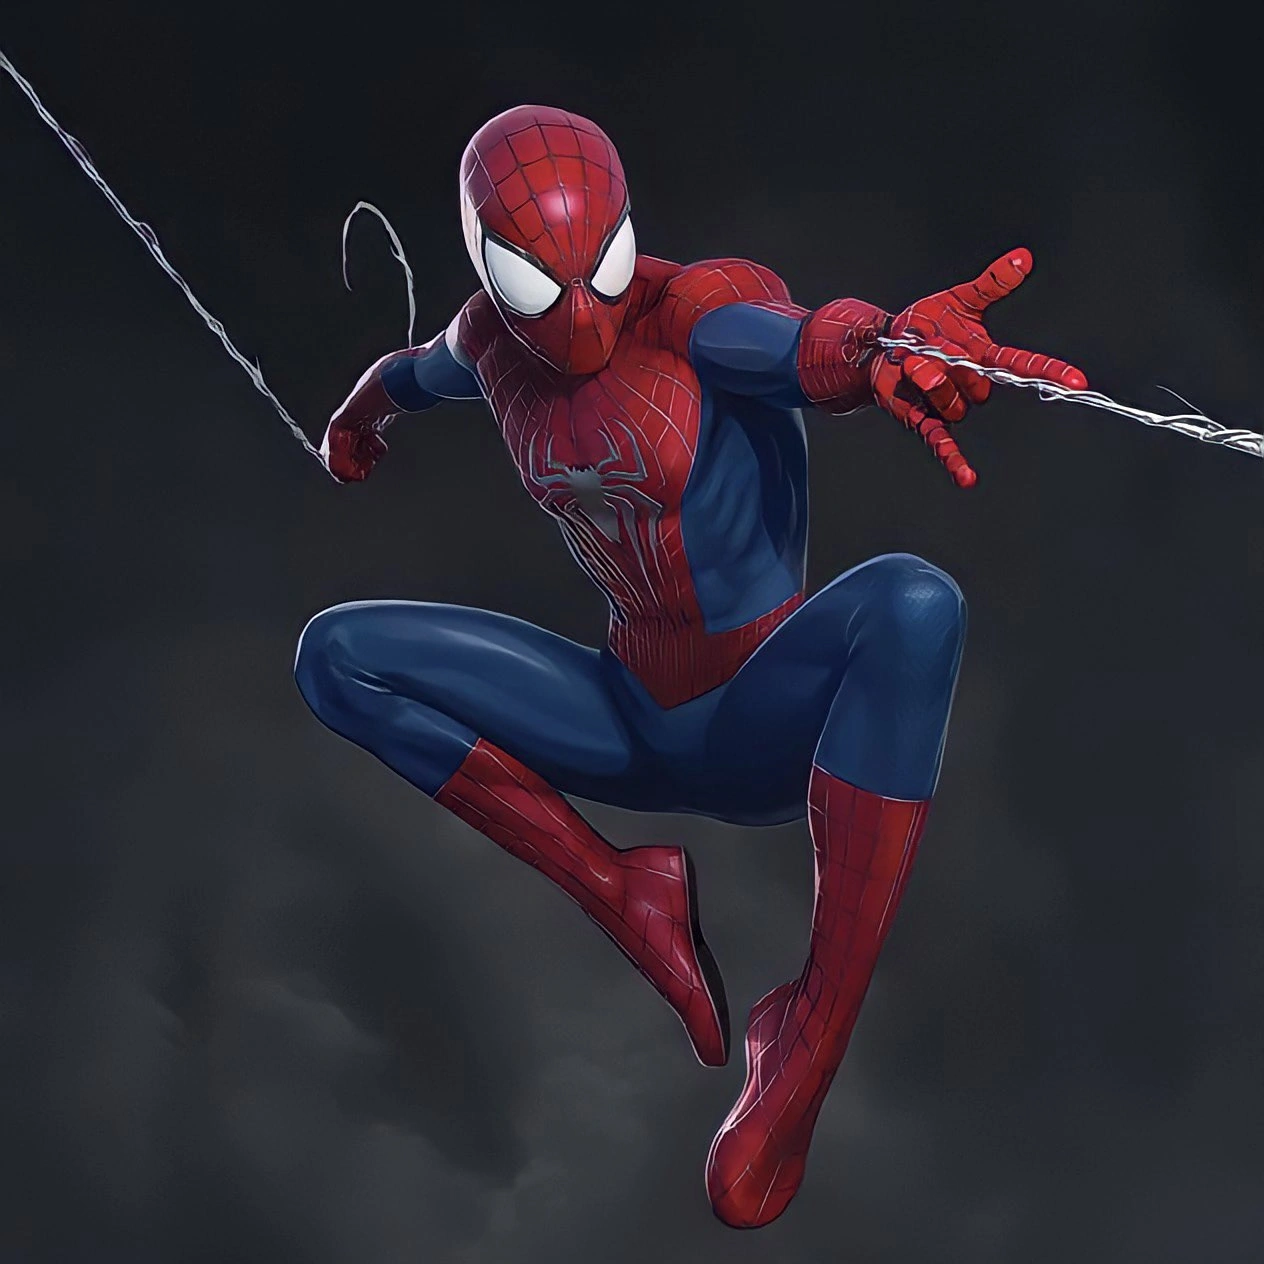 Spider-Man (The Amazing Spider-Man) | Heroes and Villains Wiki | Fandom